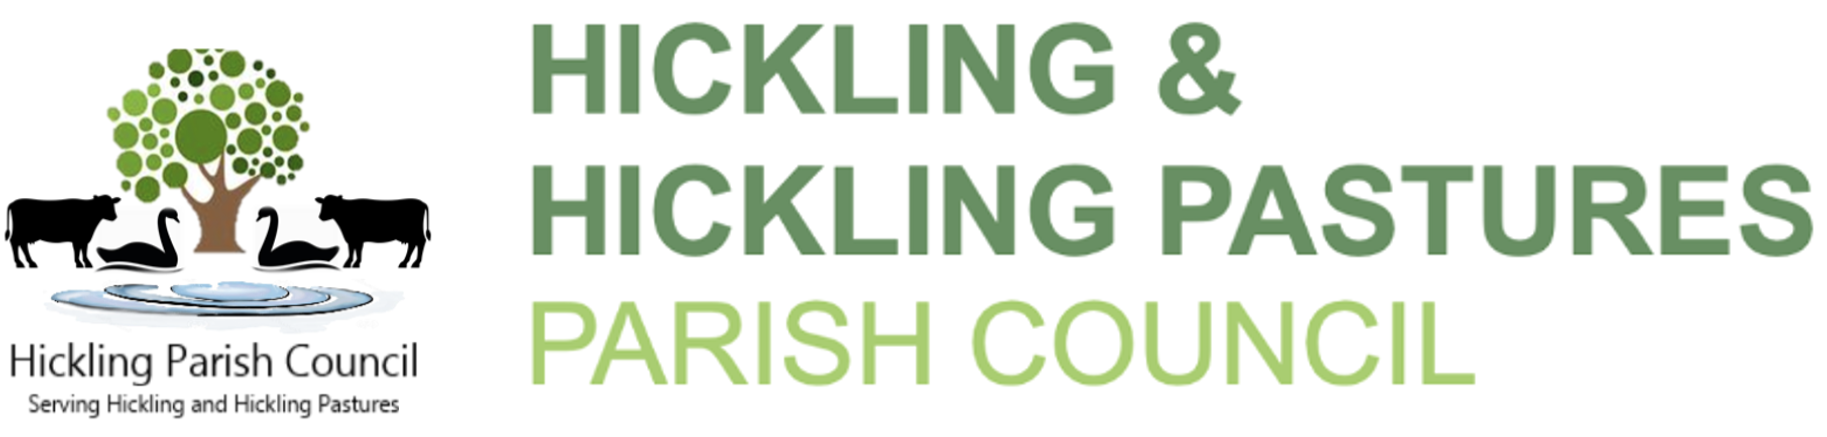 Hickling & Hickling Pastures – Parish Council